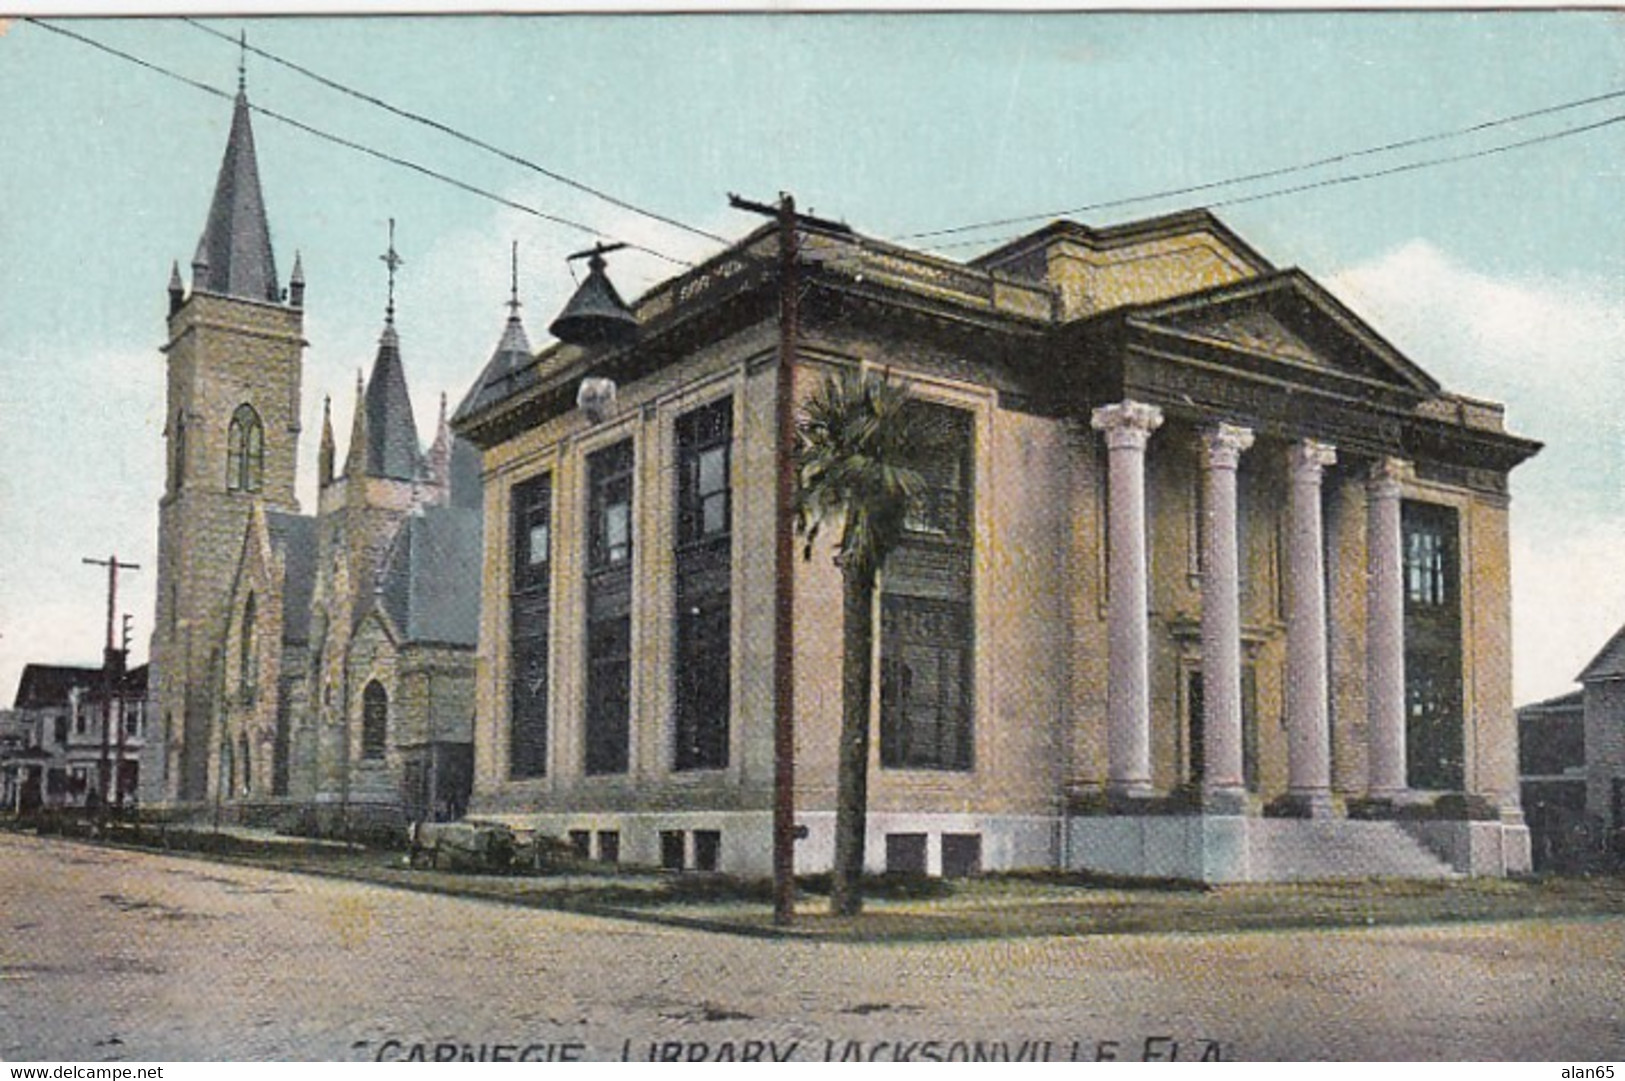 Jacksonville Florida, Carnegie Library Building Architecture, C1900s/10s Vintage Postcard - Bibliotheken